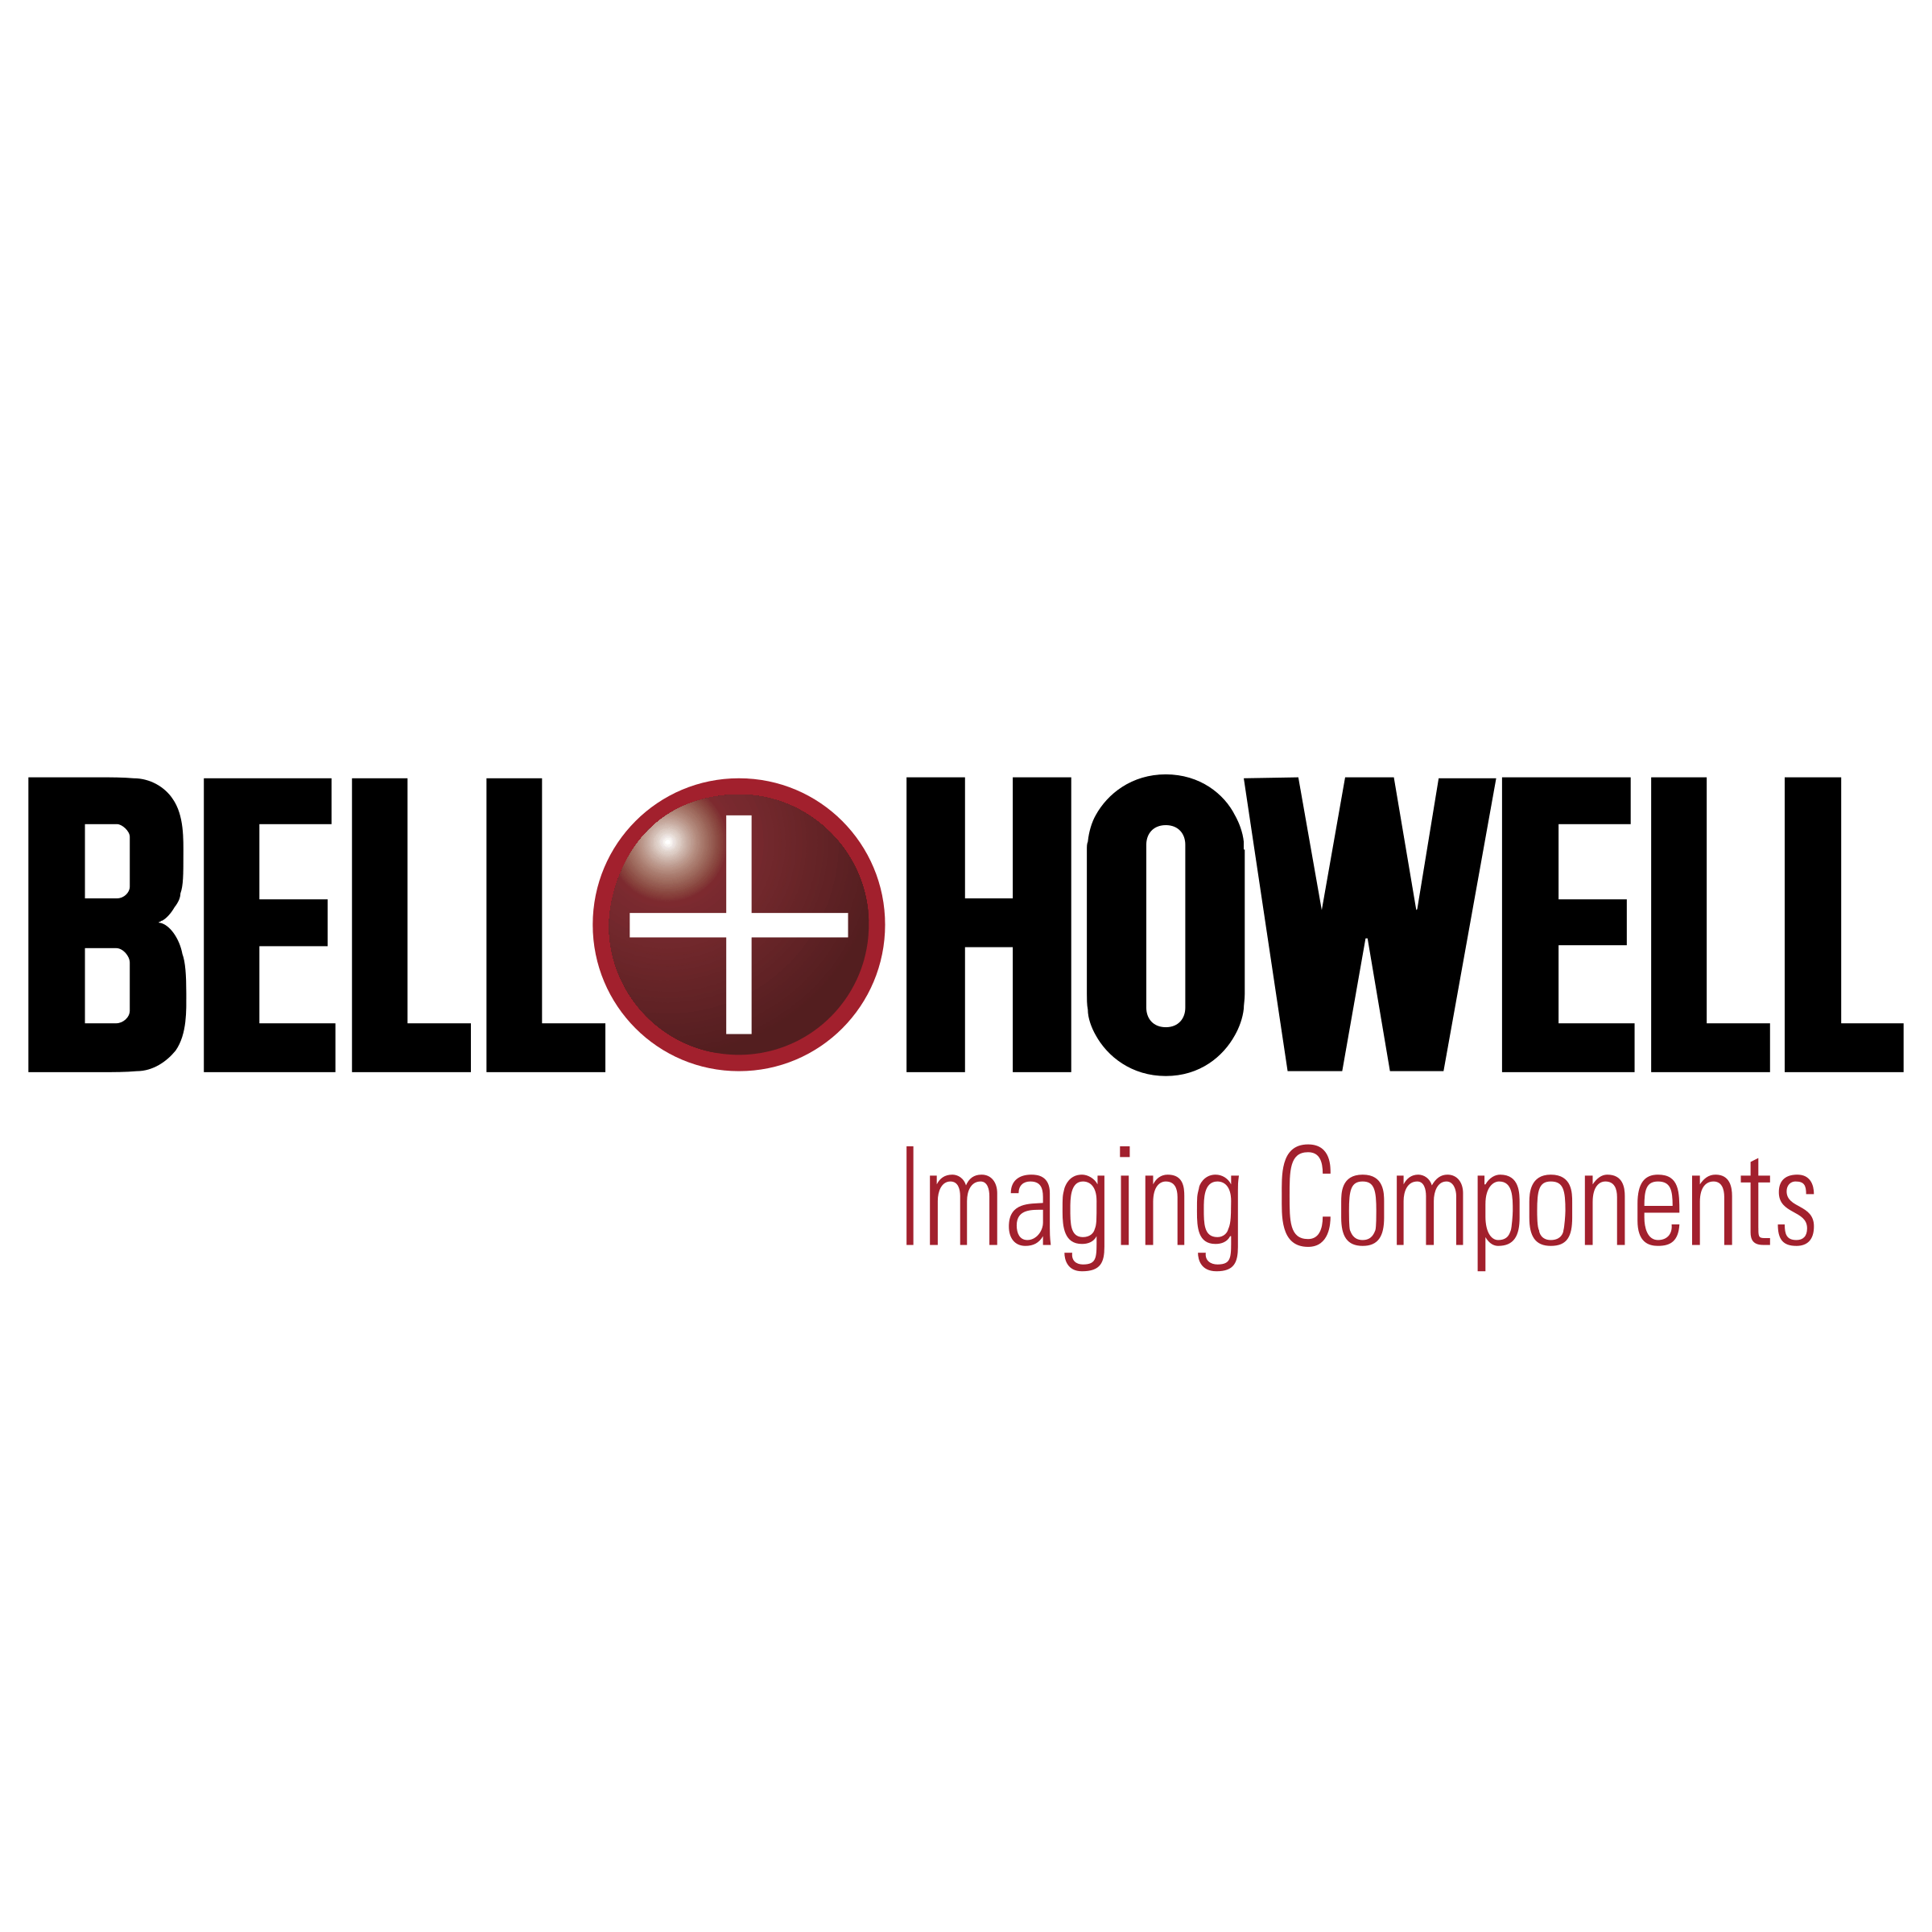 Howell Logo - Bell & Howell Logo PNG Transparent & SVG Vector - Freebie Supply